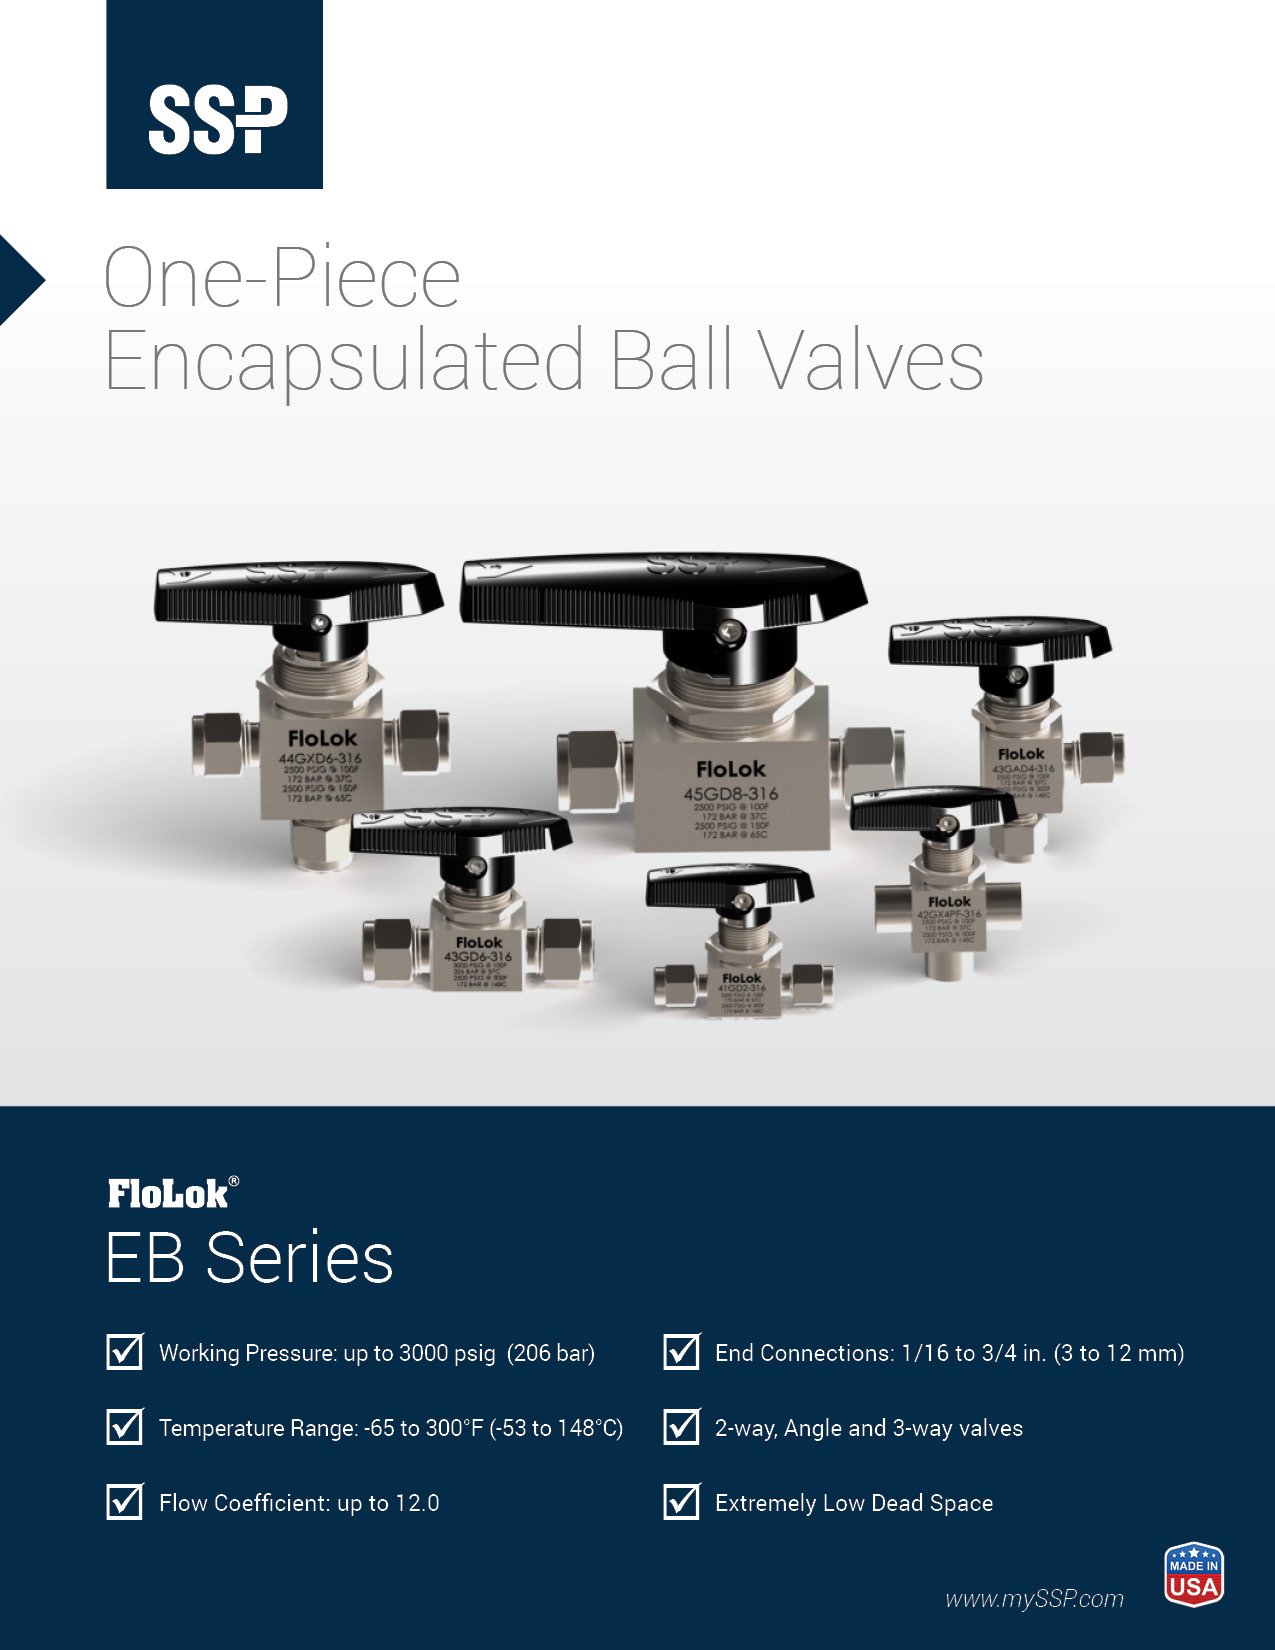 EB Series Ball Valve Catalog - EBPC Cover Image